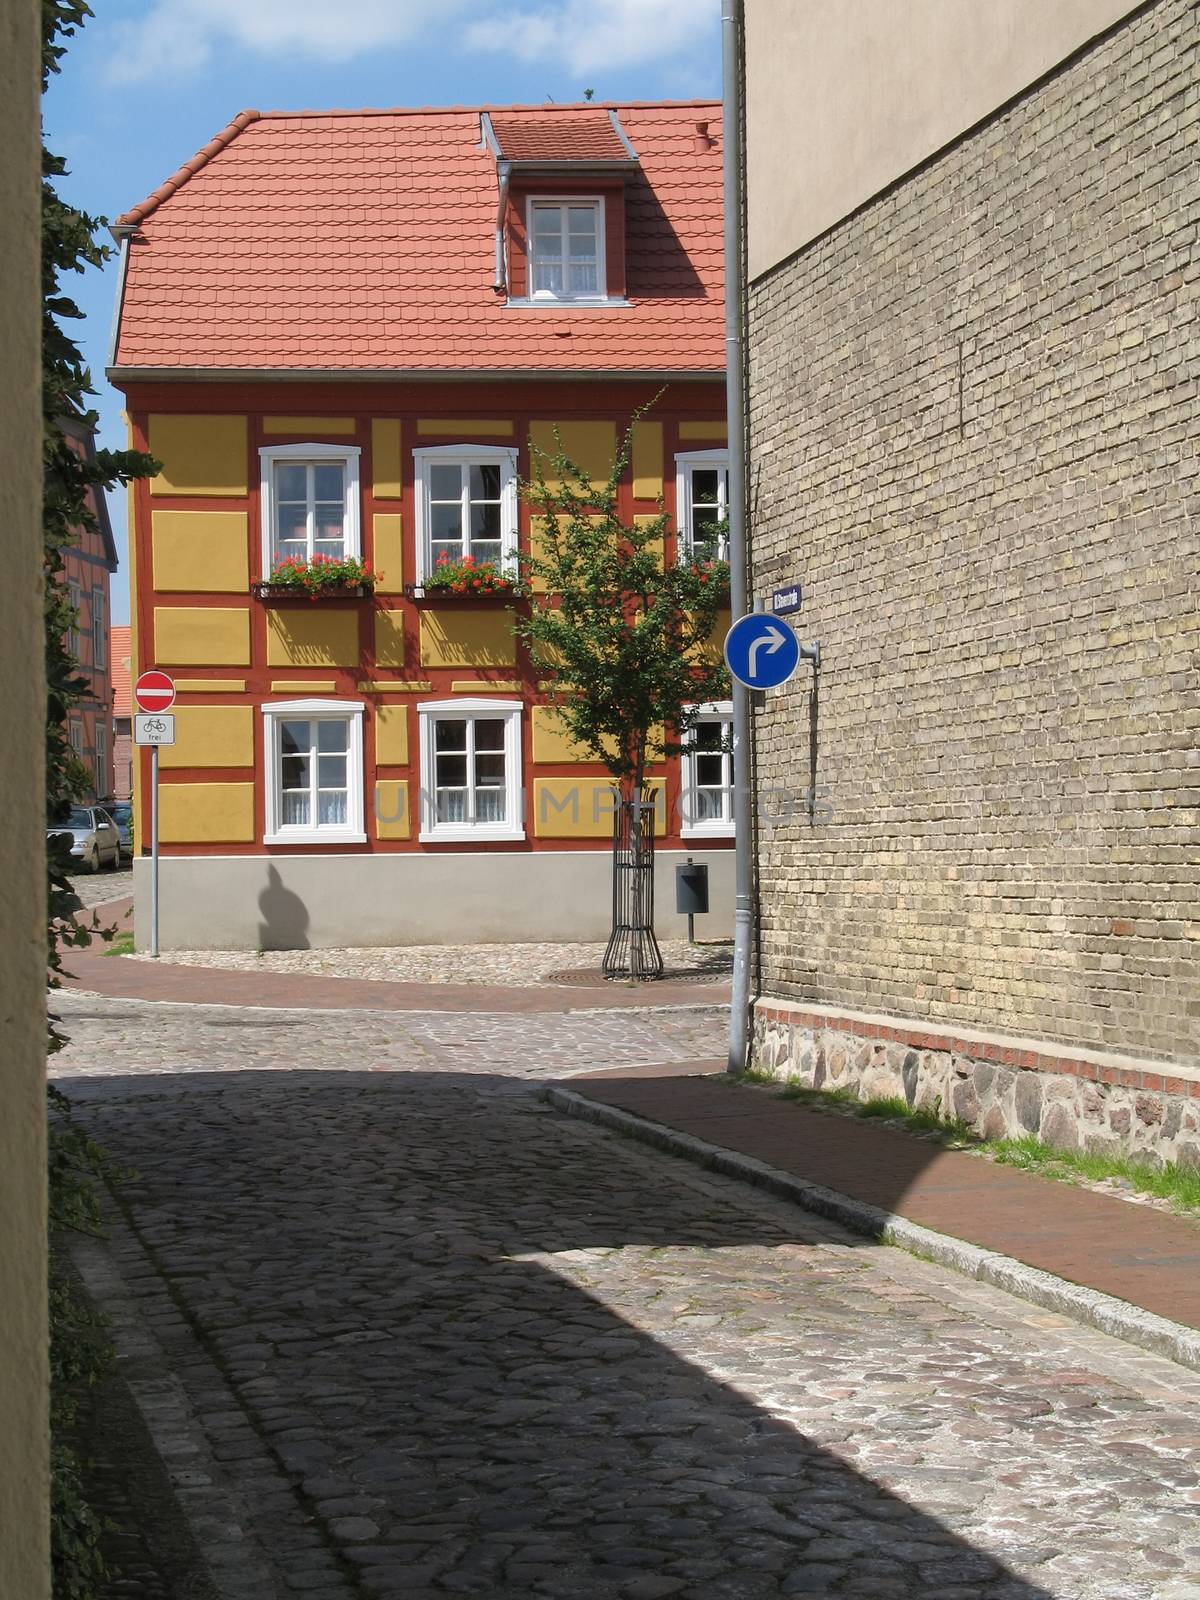 Street scene in Roebel, Mecklenburg-Western Pomerania, Germany.